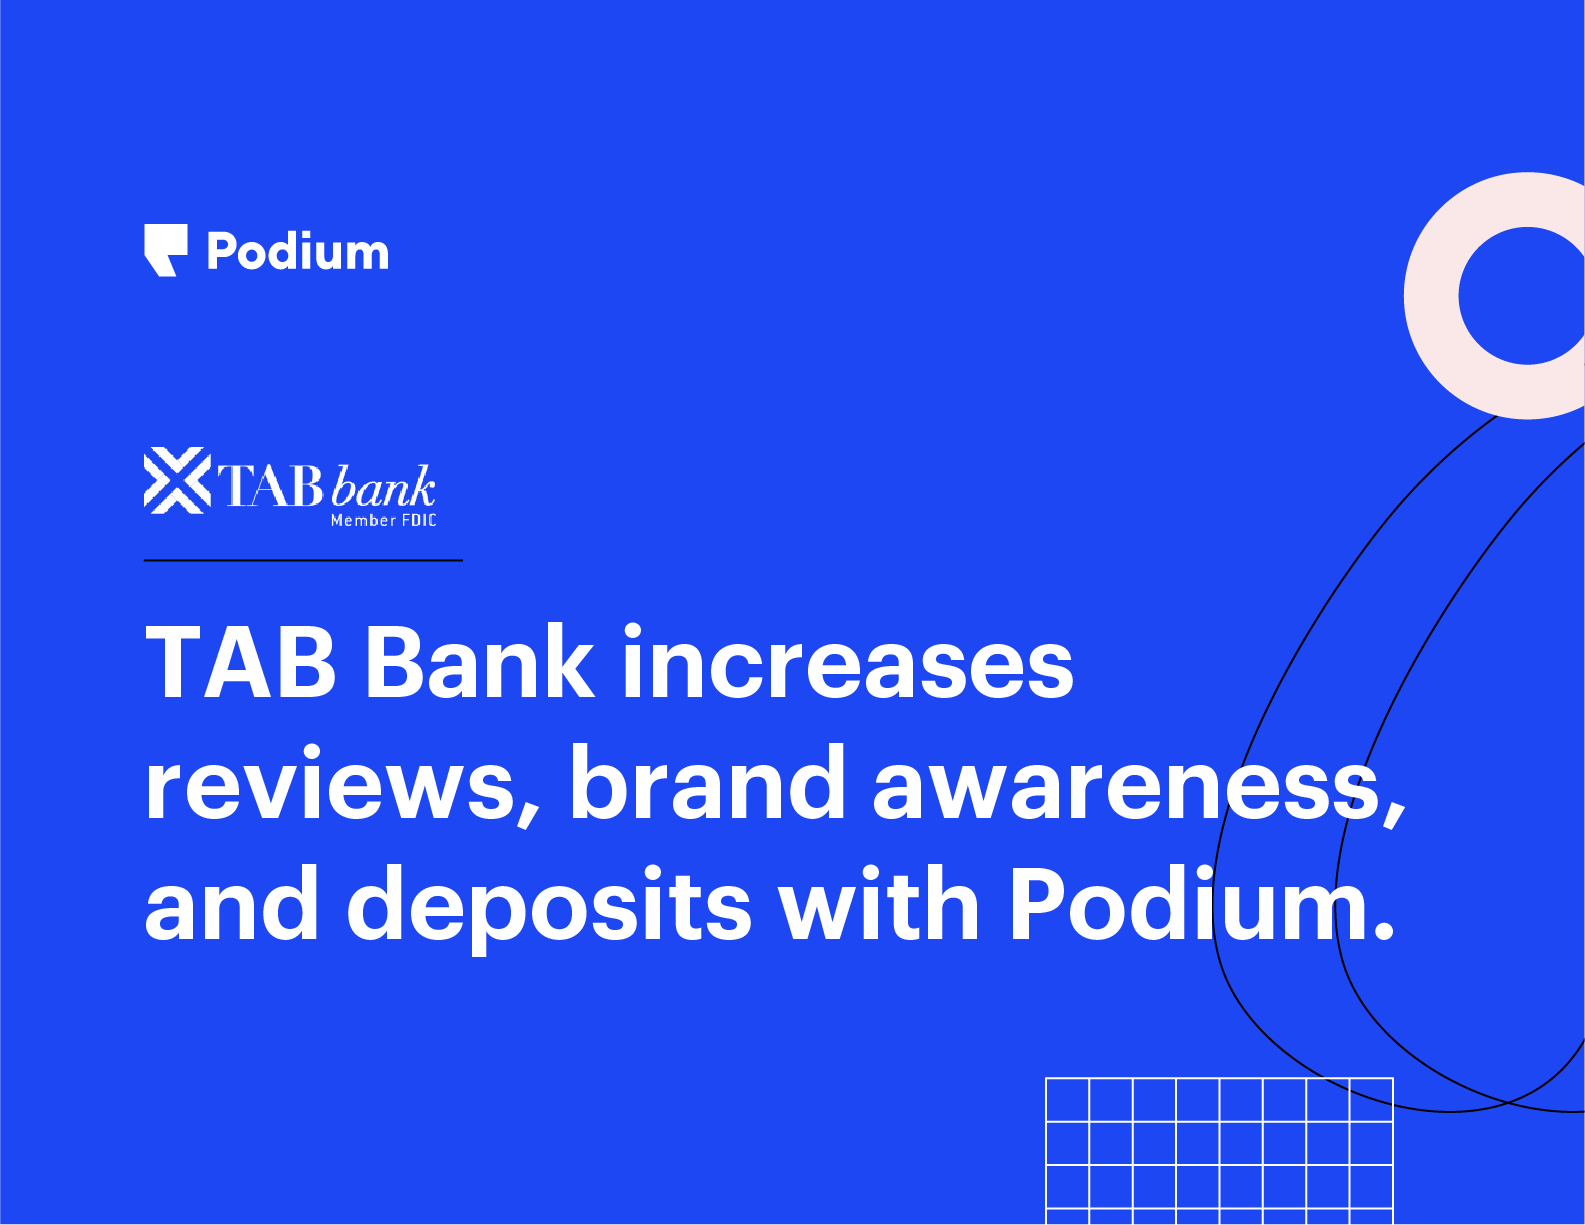 TAB Bank increases reviews, awareness, and deposits